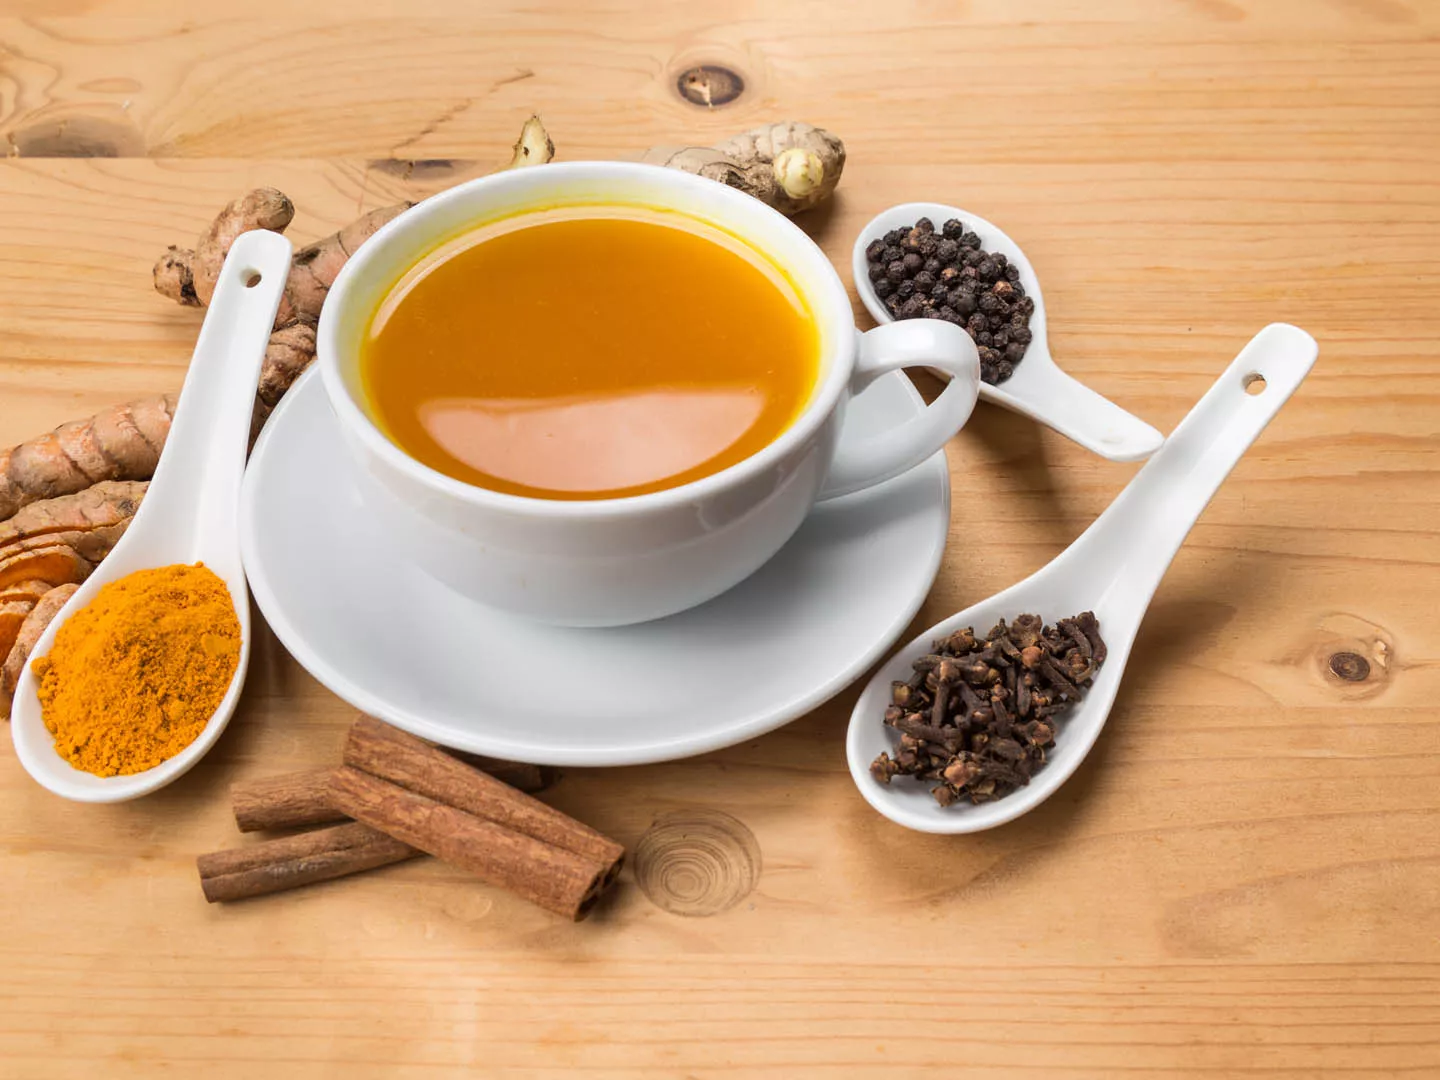 When Should You Not Drink Turmeric Tea